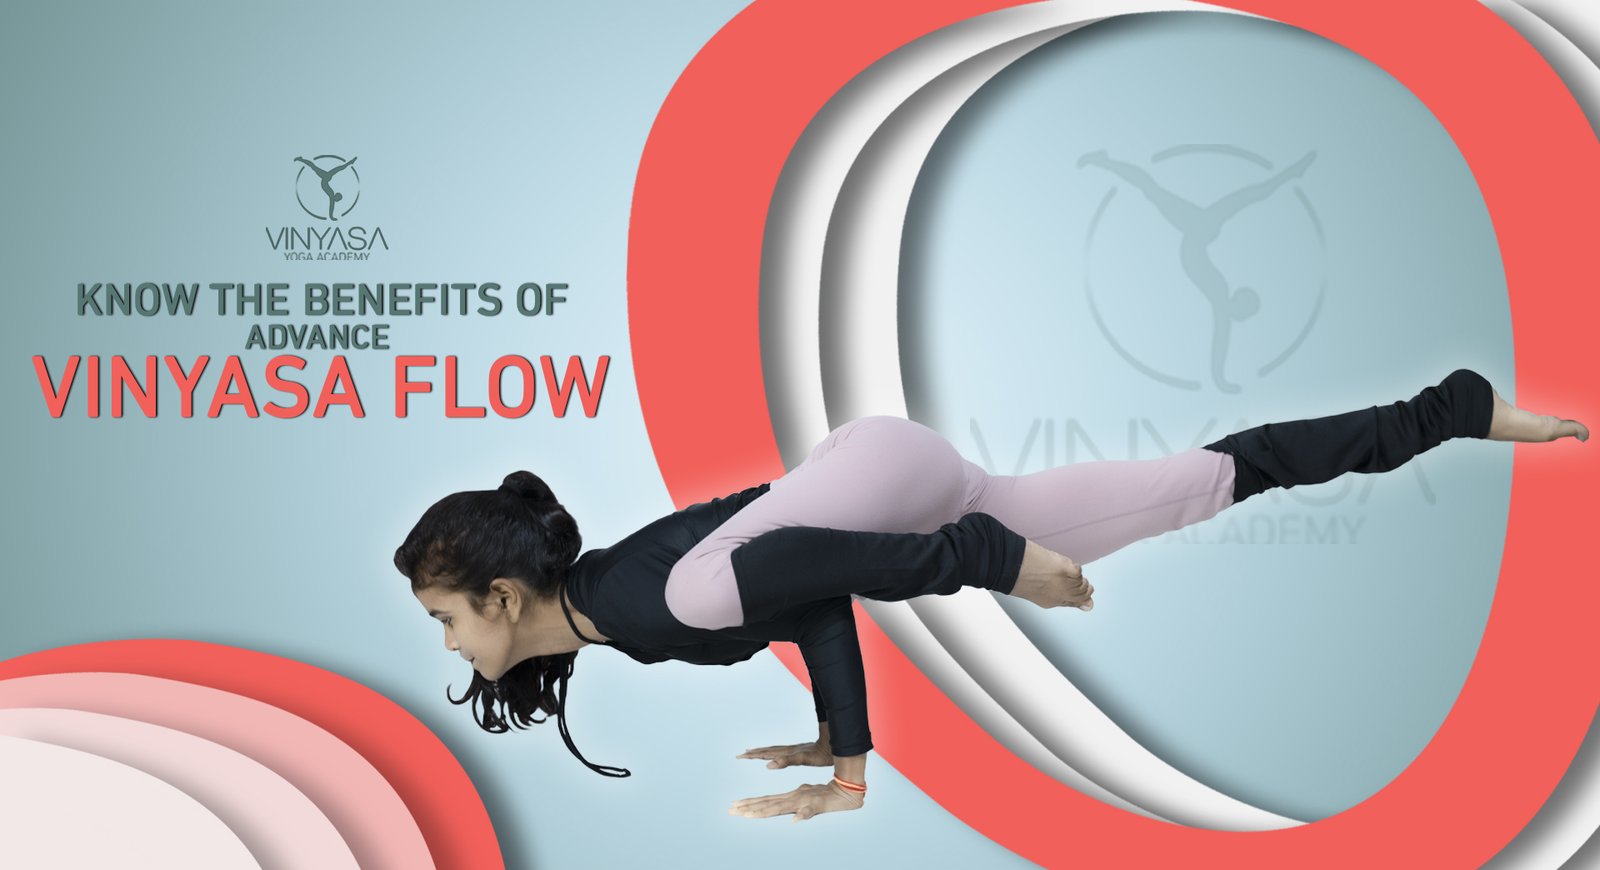 Benefits of Vinyasa Yoga regular practice - Vinyasa Yoga Academy Blogs